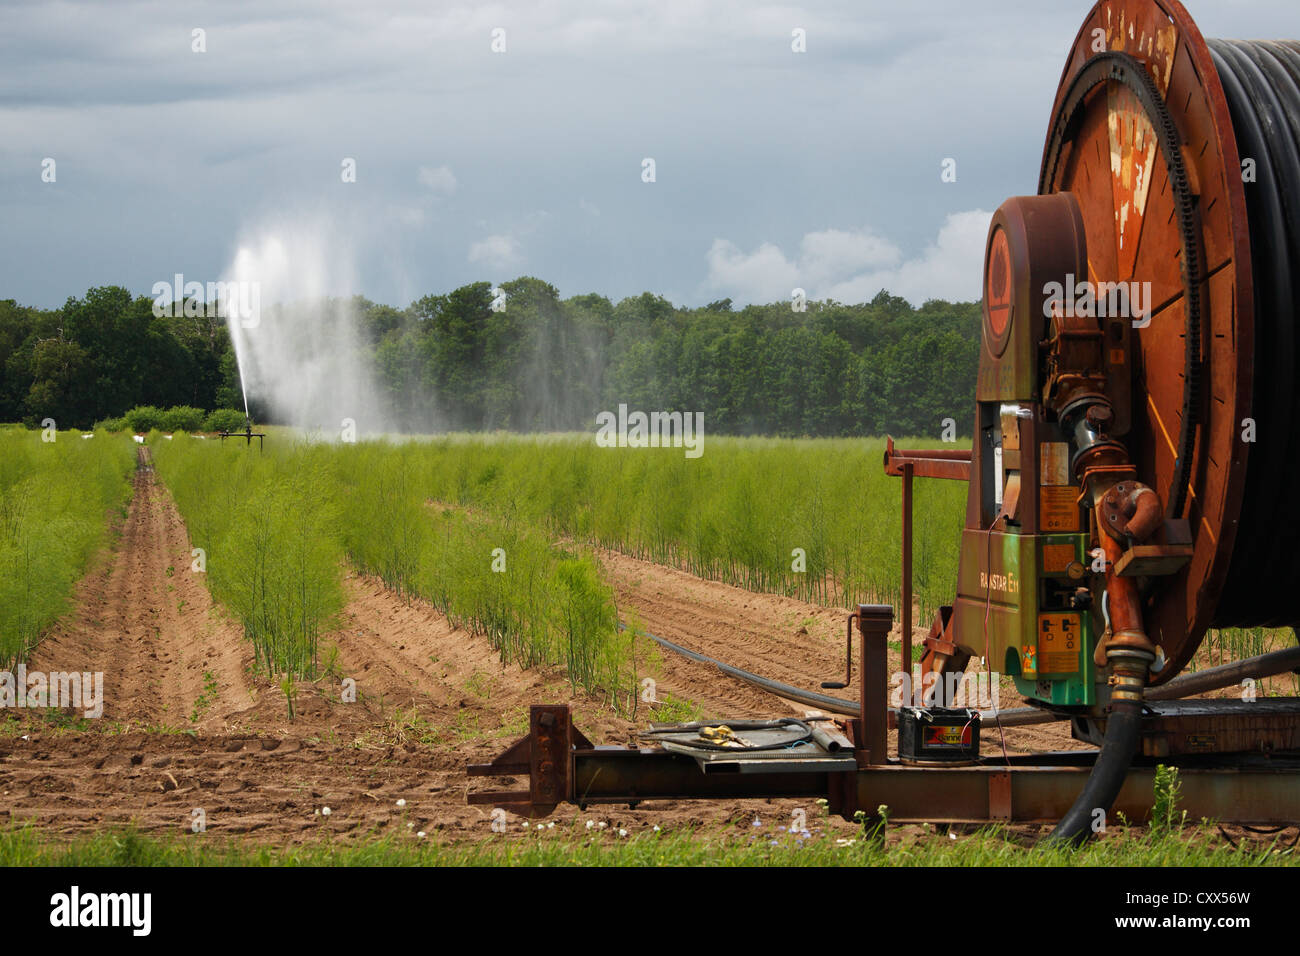 irrigation sprayer in an asparagus field Stock Photo